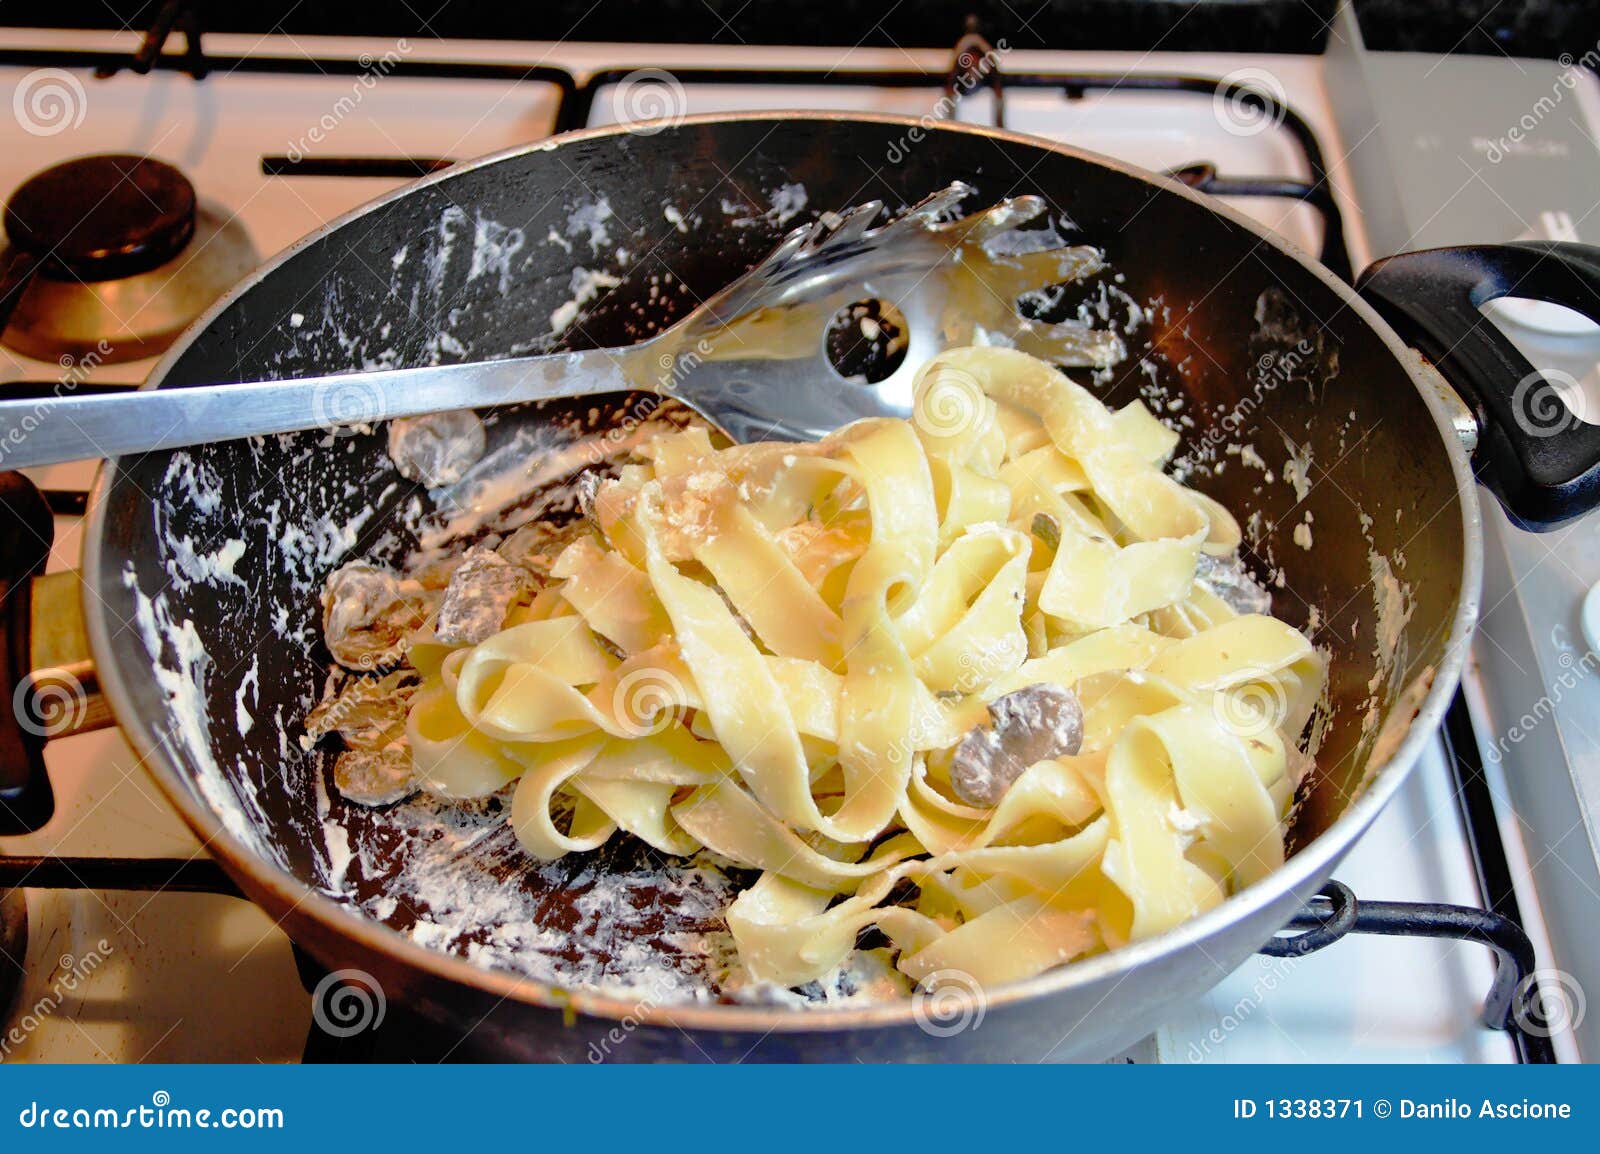 cooking tagliatelle pasta